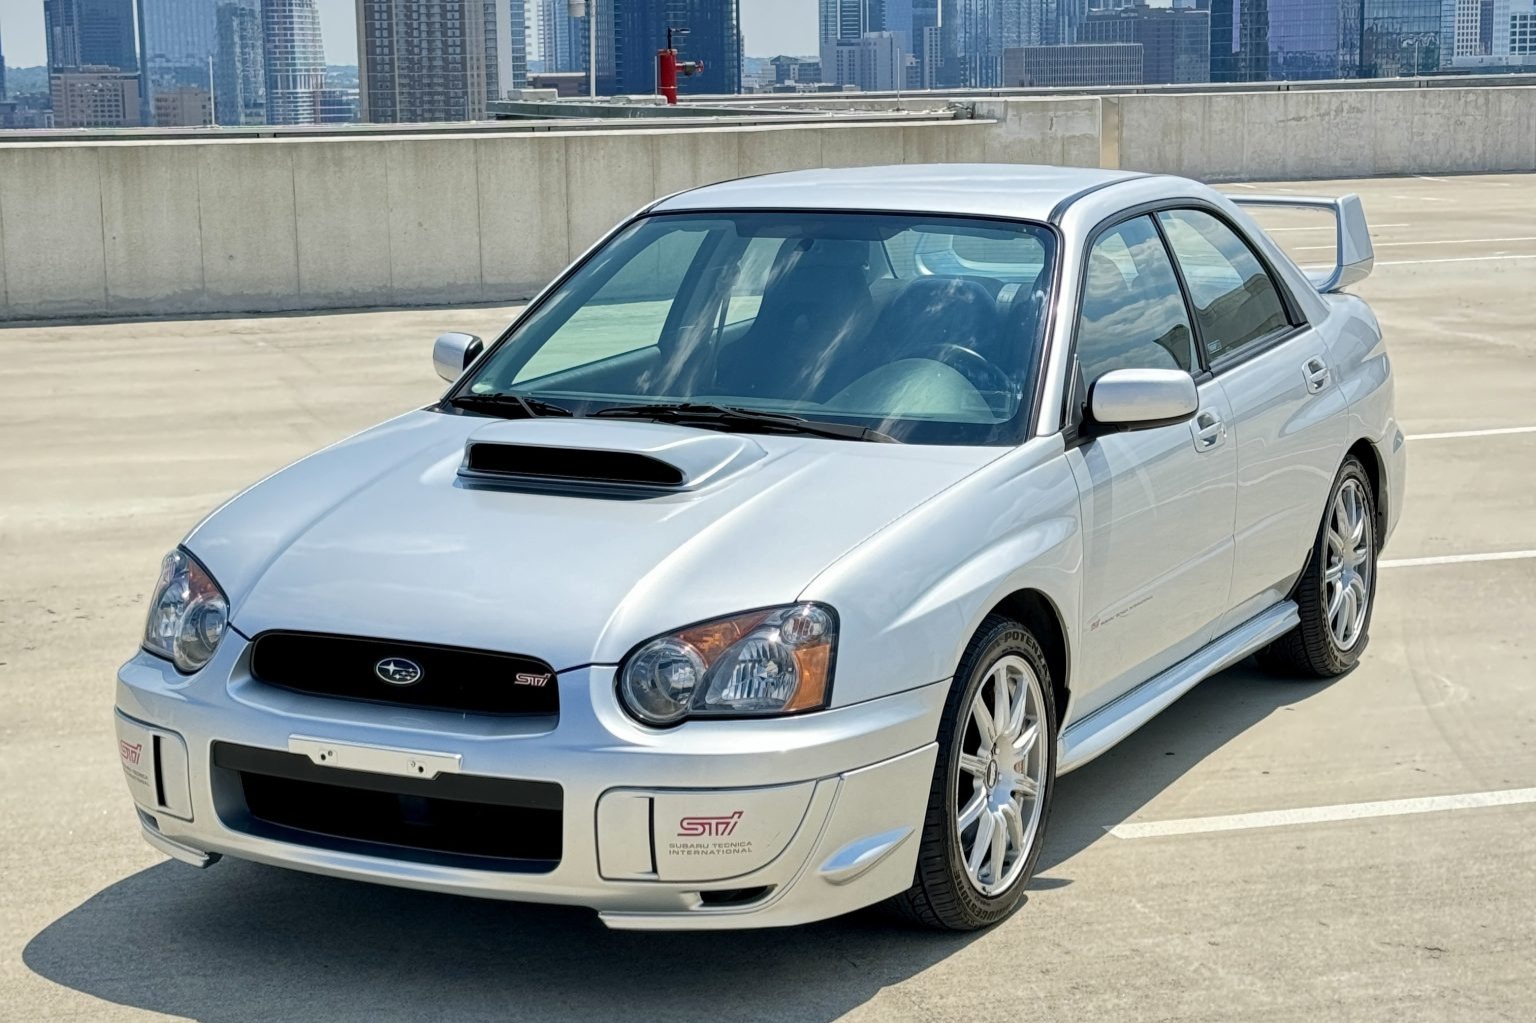 Used 50k-Mile 2004 Subaru Impreza WRX STi Review